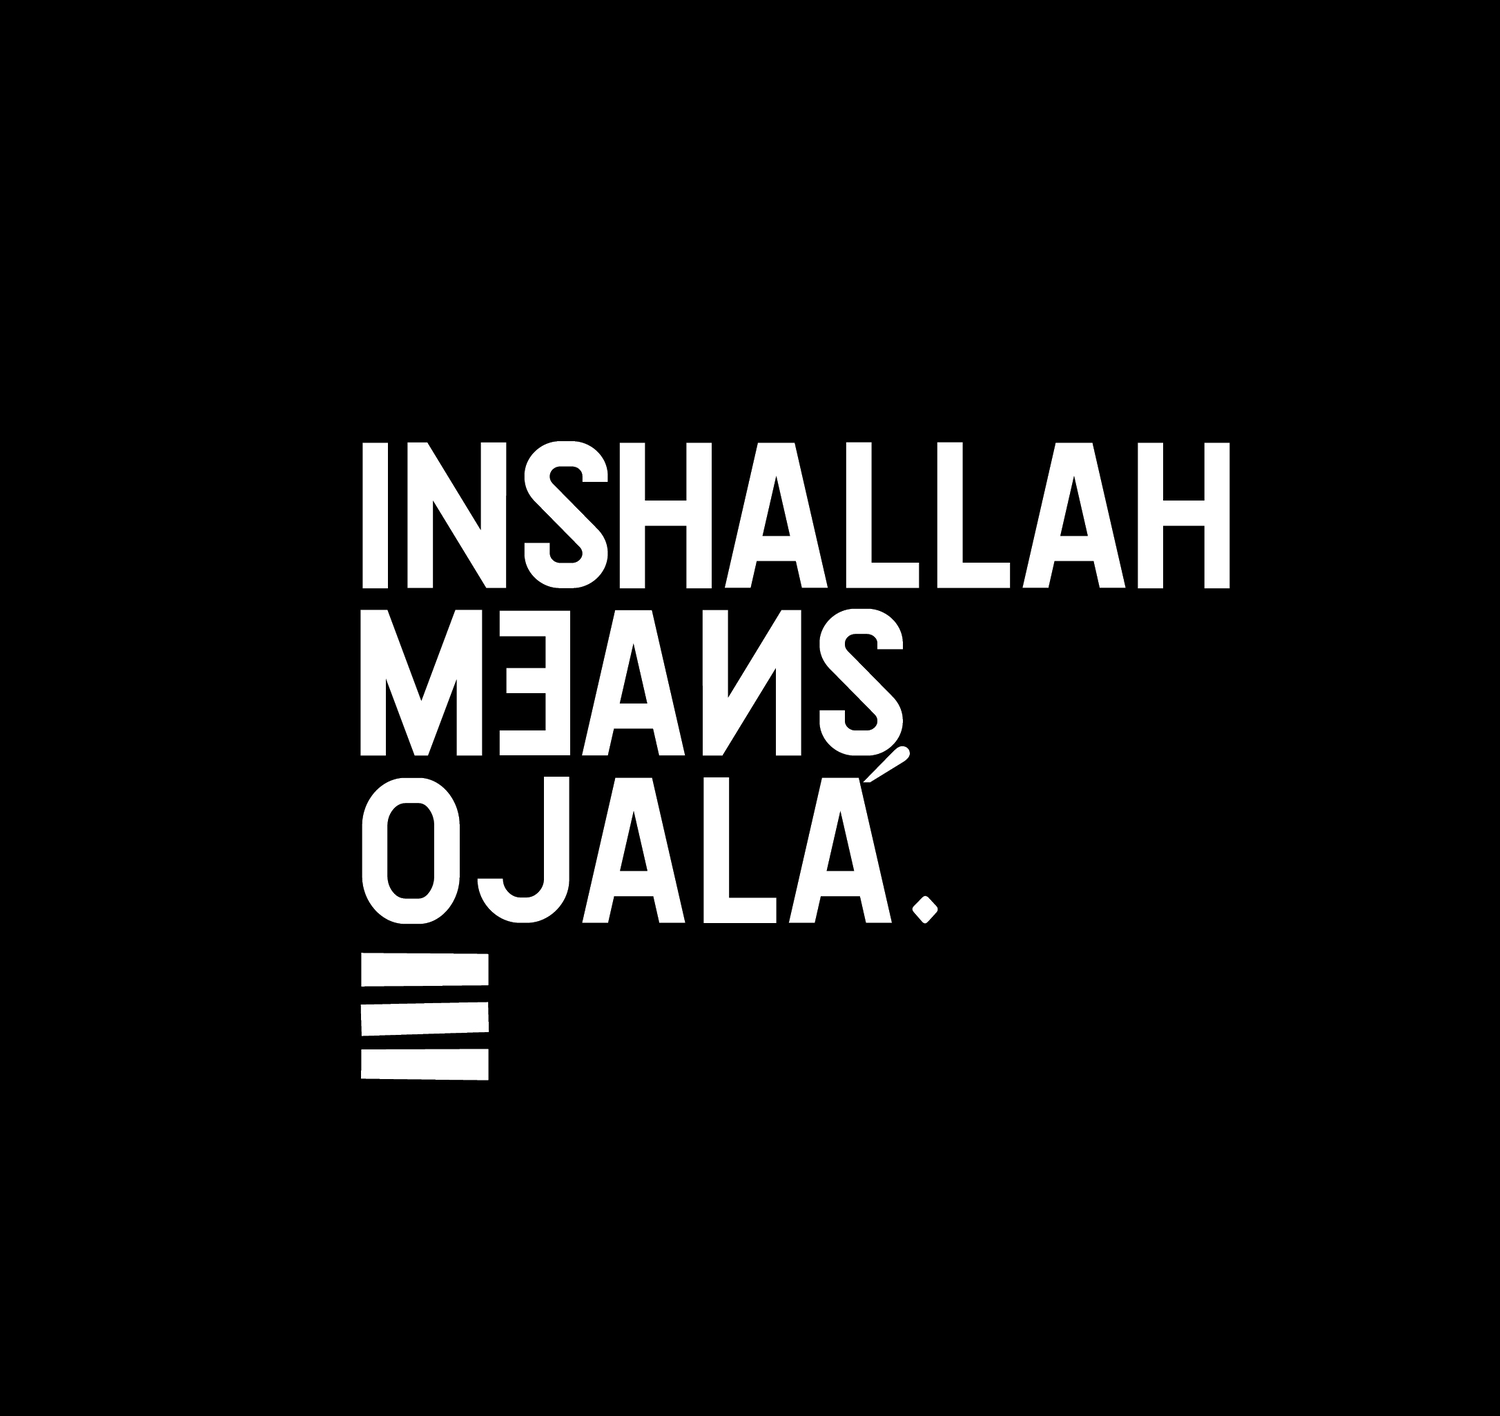 Inshallah meaning